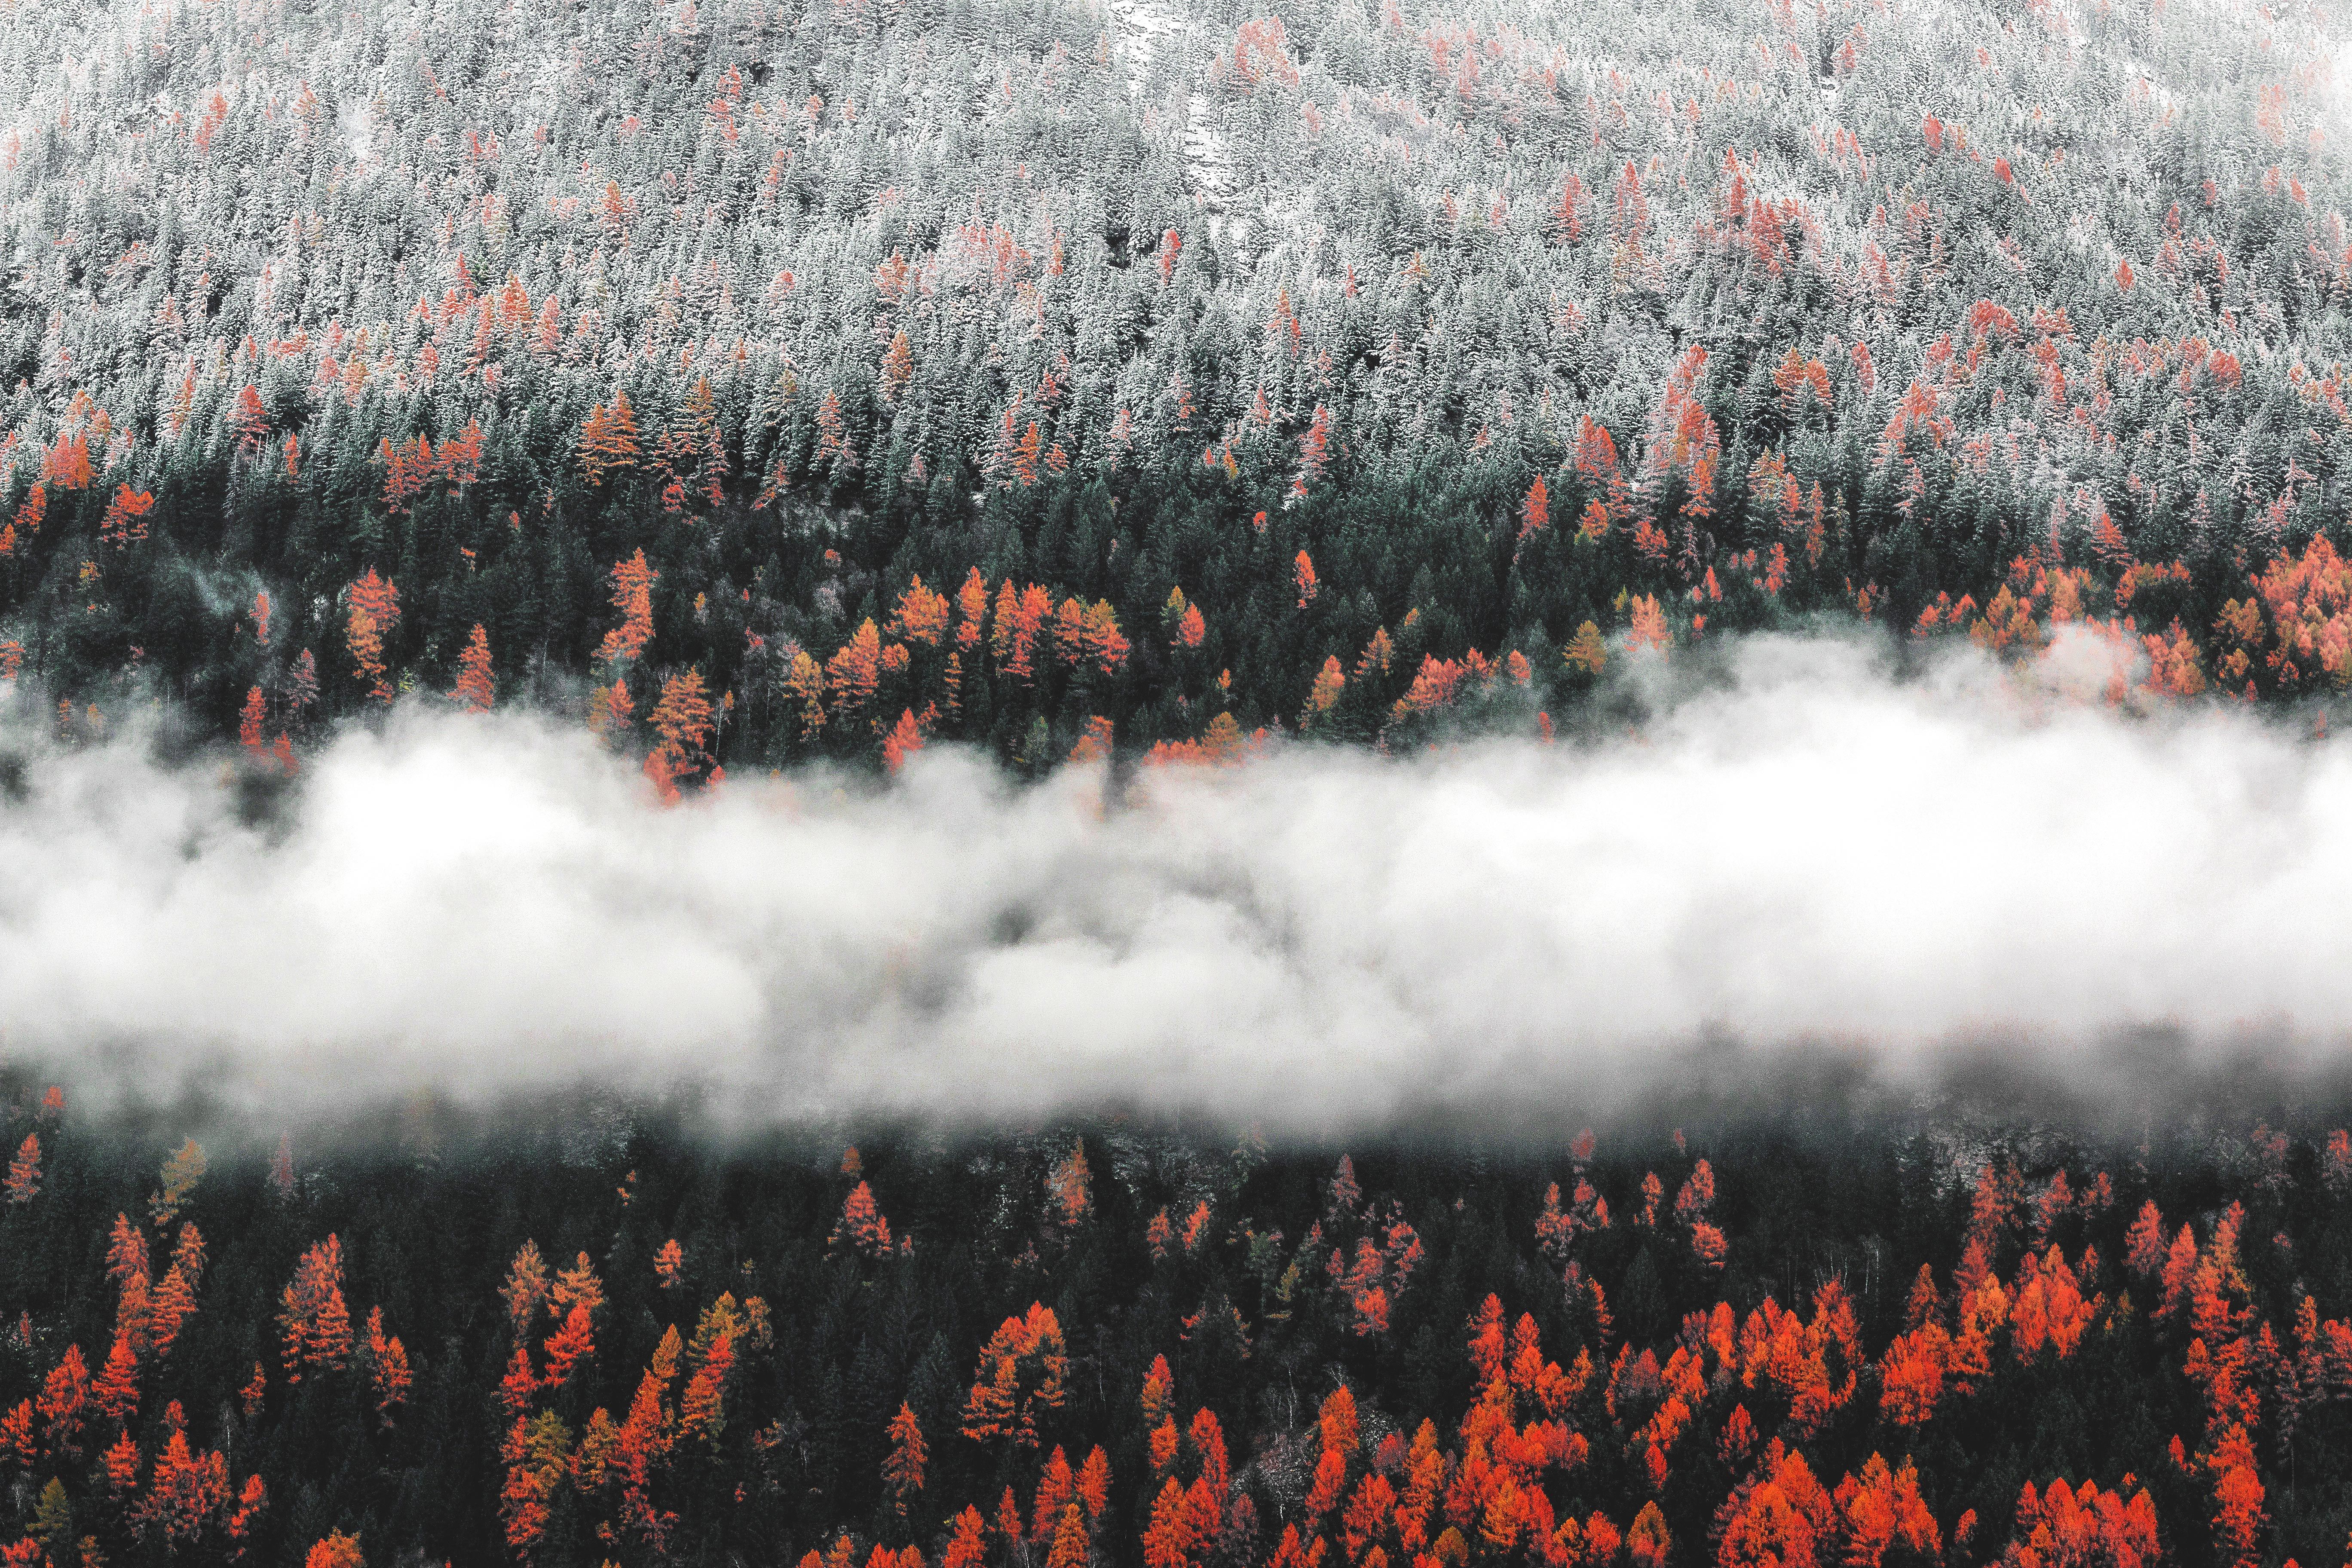 Orange Tress Autumn Forest Landscape Mist Scenic Nature, HD Nature, 4k Wallpaper, Image, Background, Photo and Picture